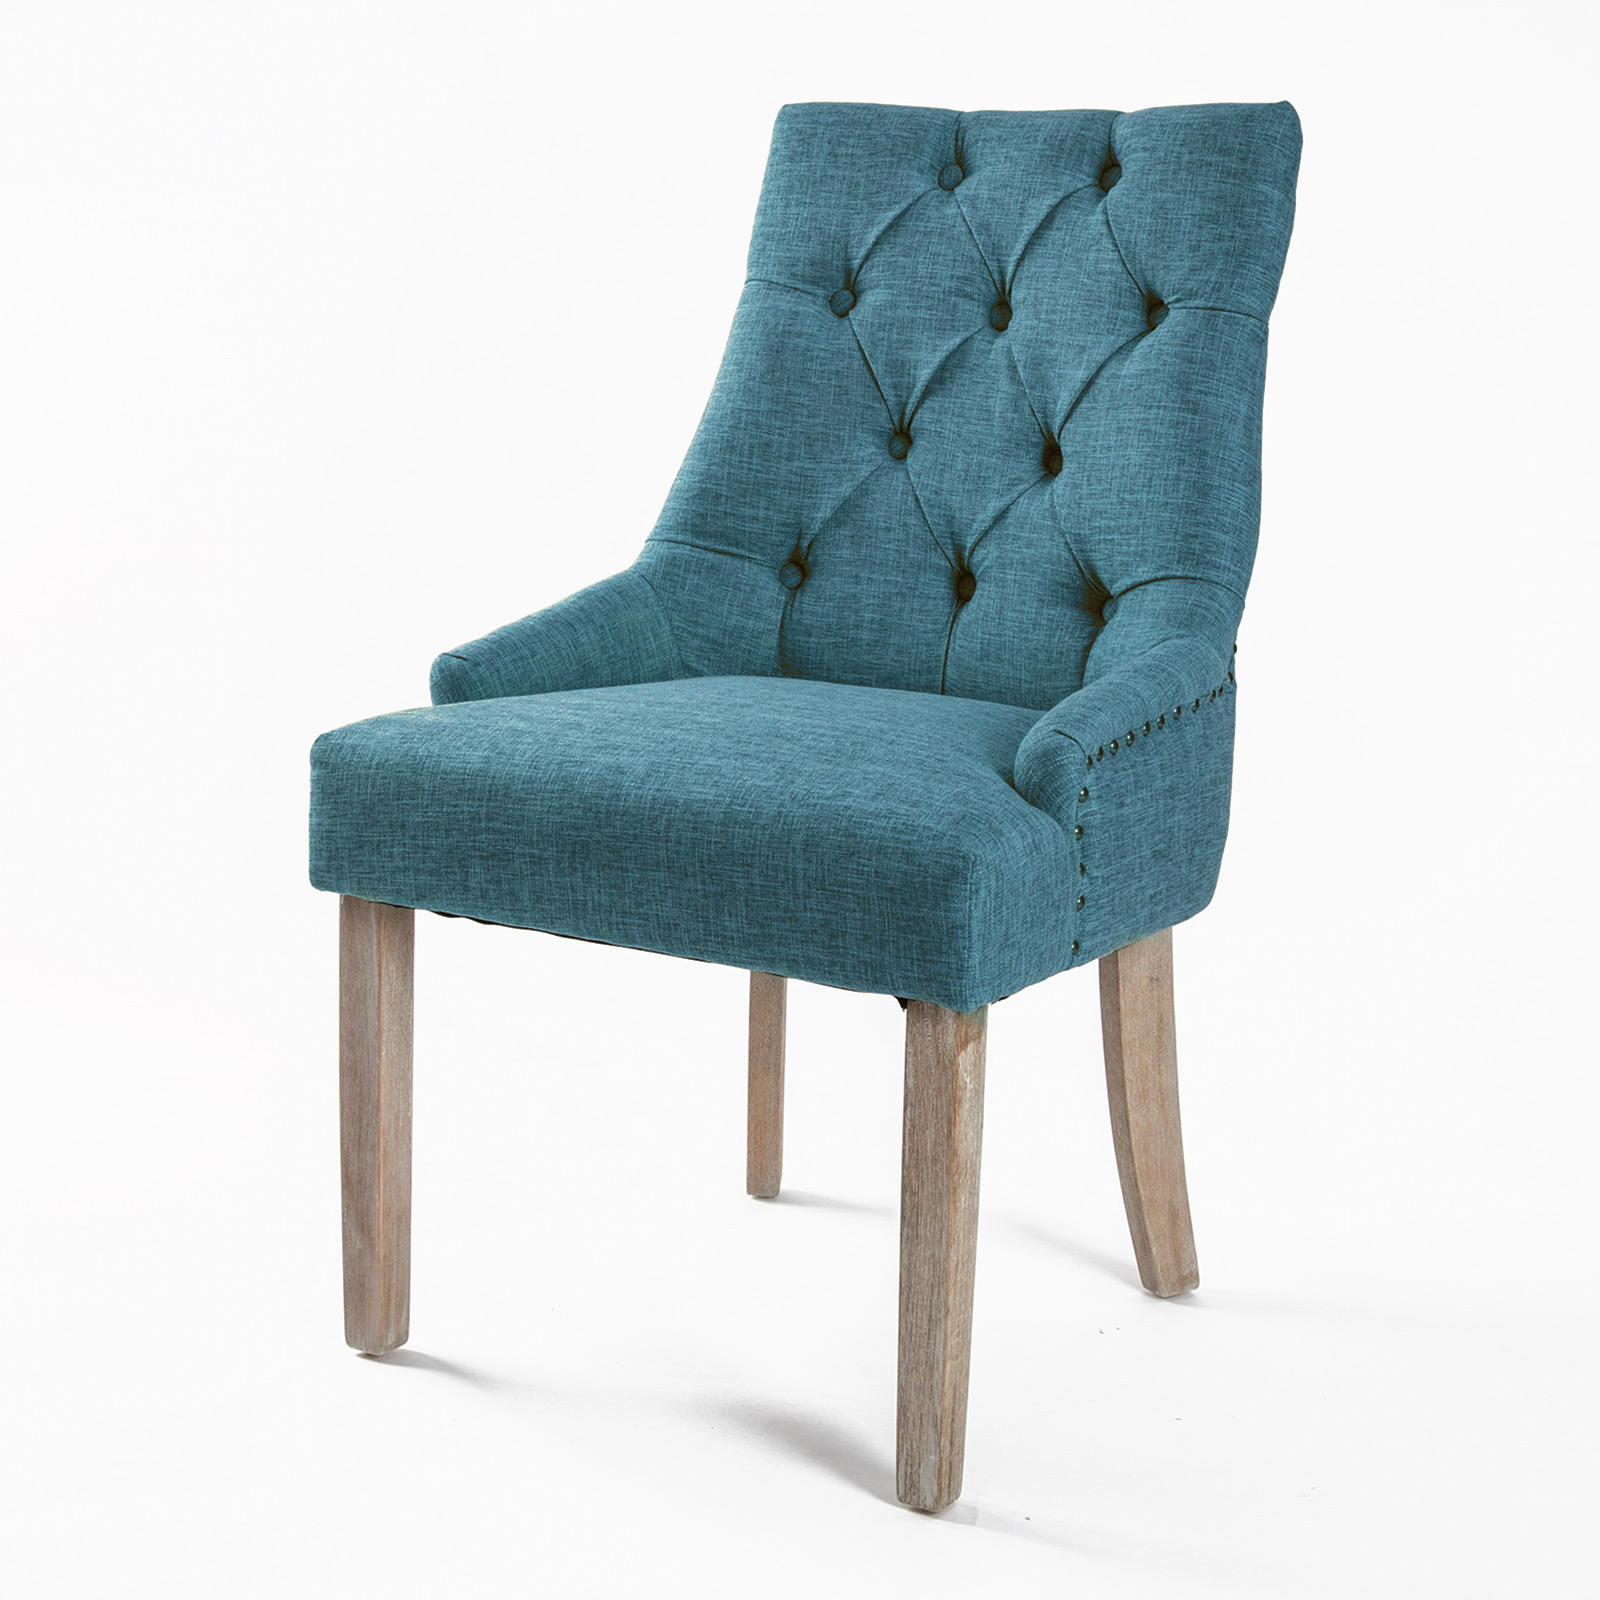 1X French Provincial Oak Leg Chair AMOUR - DARK BLUE